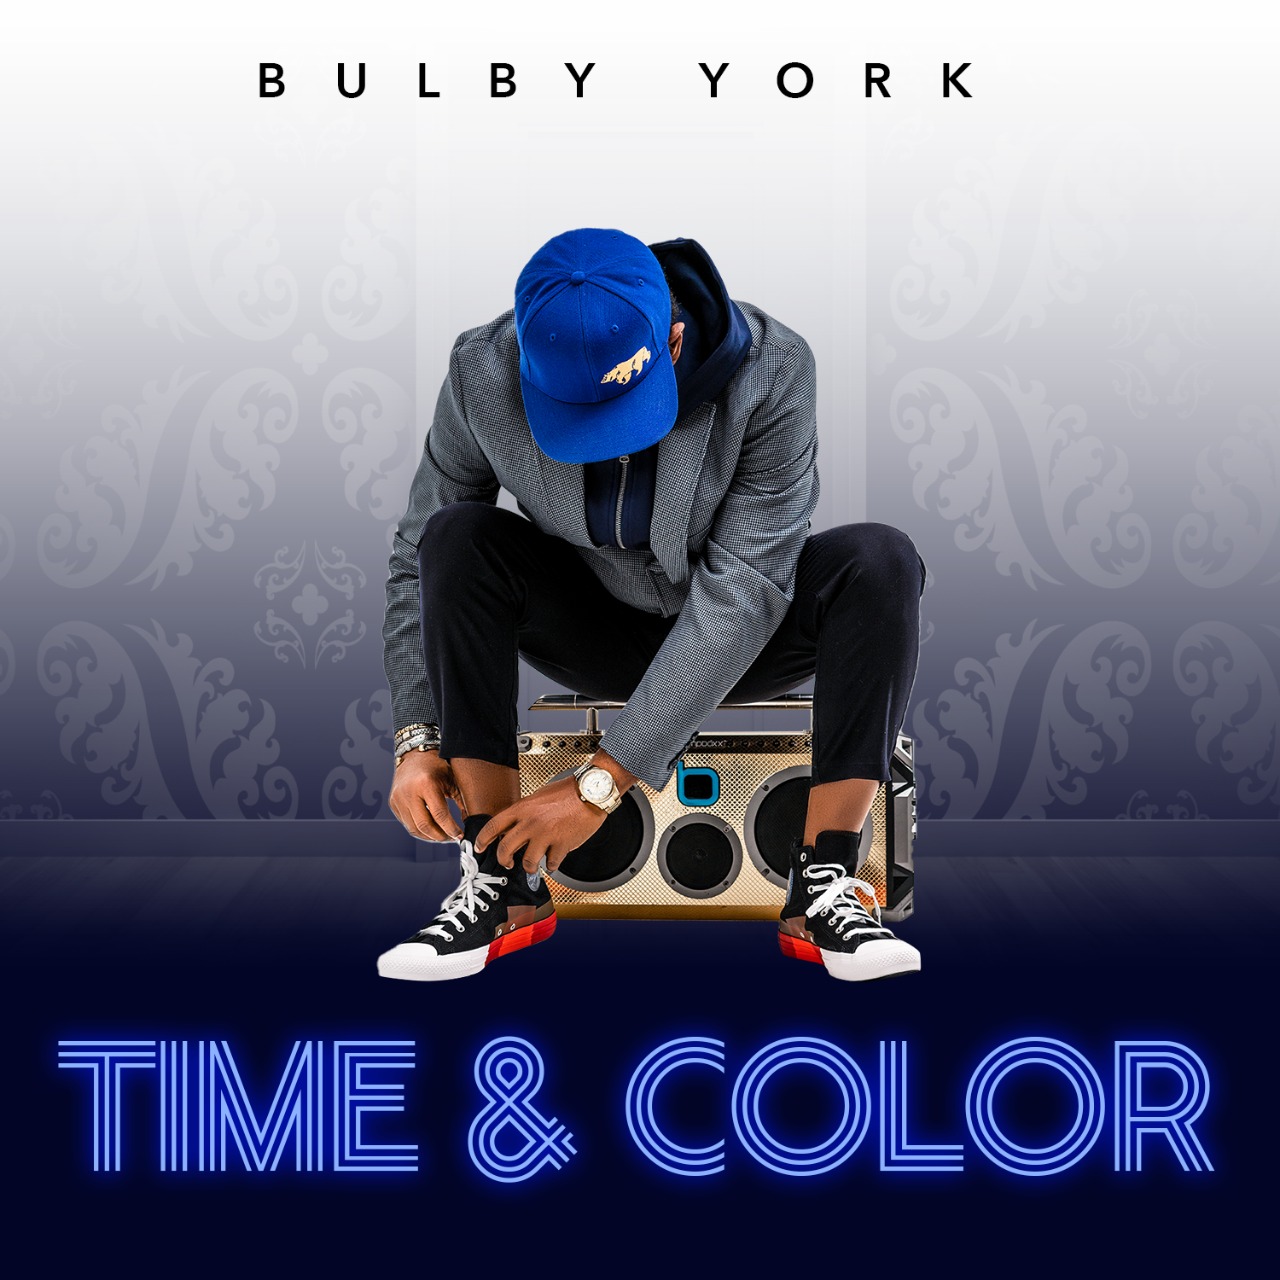 Bulby York's Time & Color